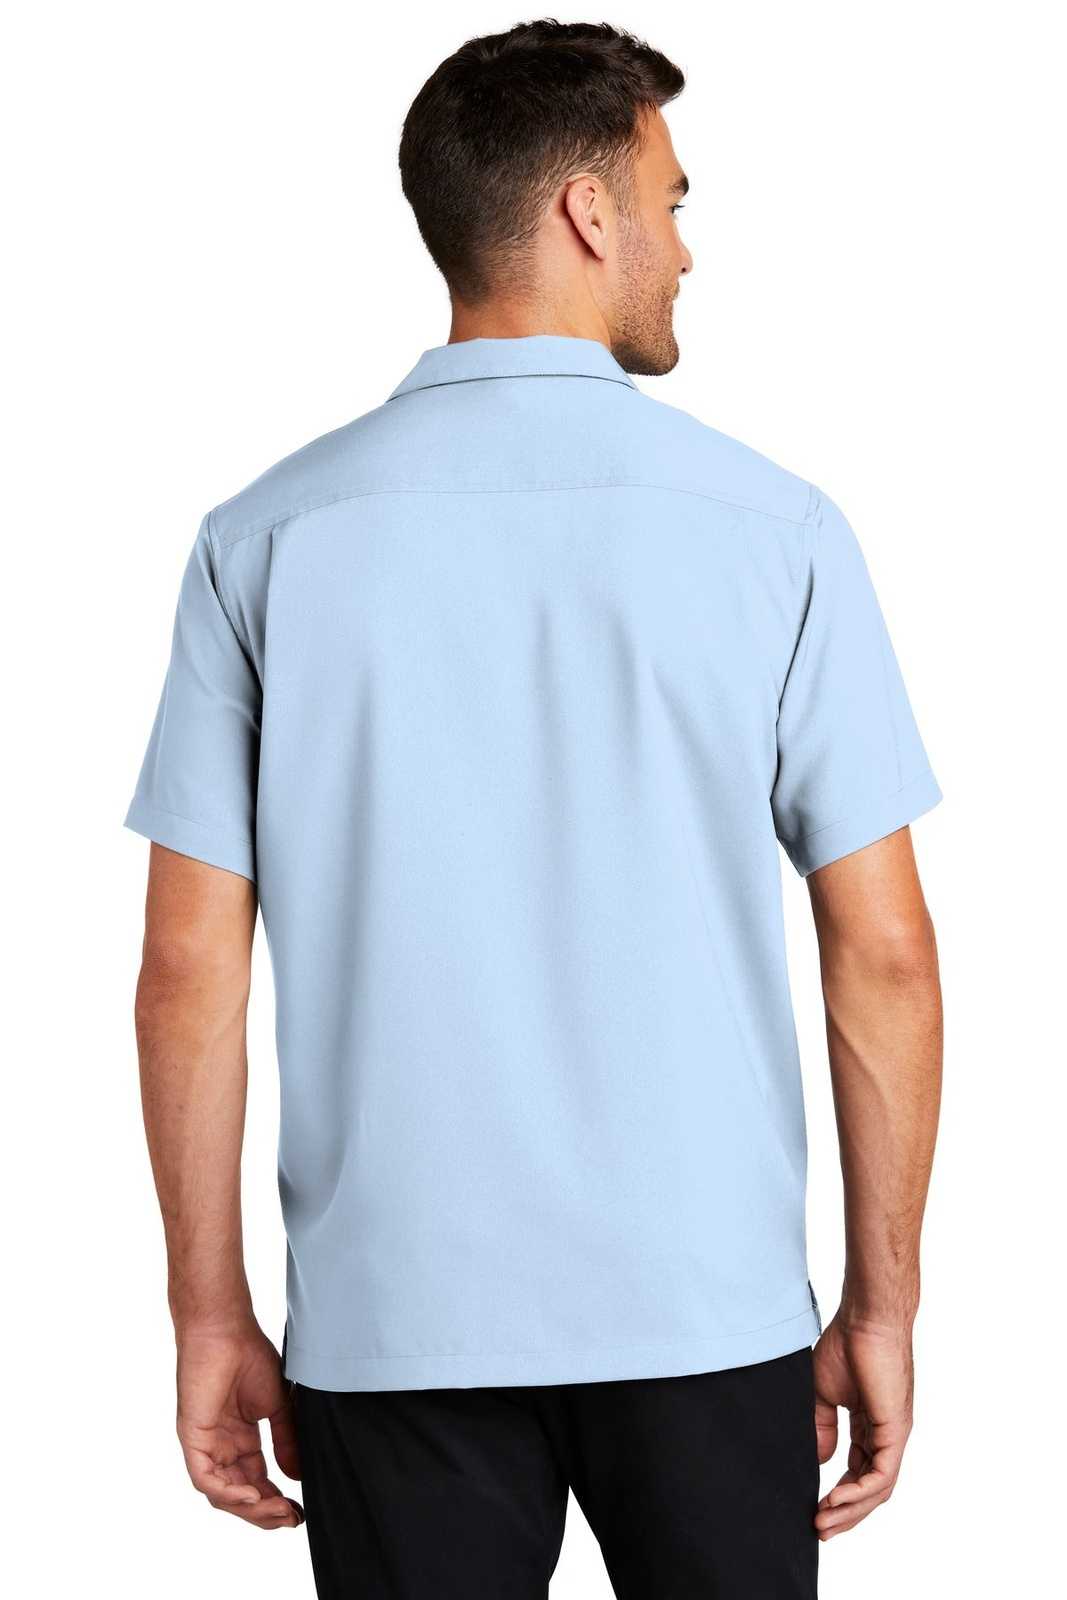 Port Authority W400 Short Sleeve Performance Staff Shirt - Cloud Blue - HIT a Double - 2